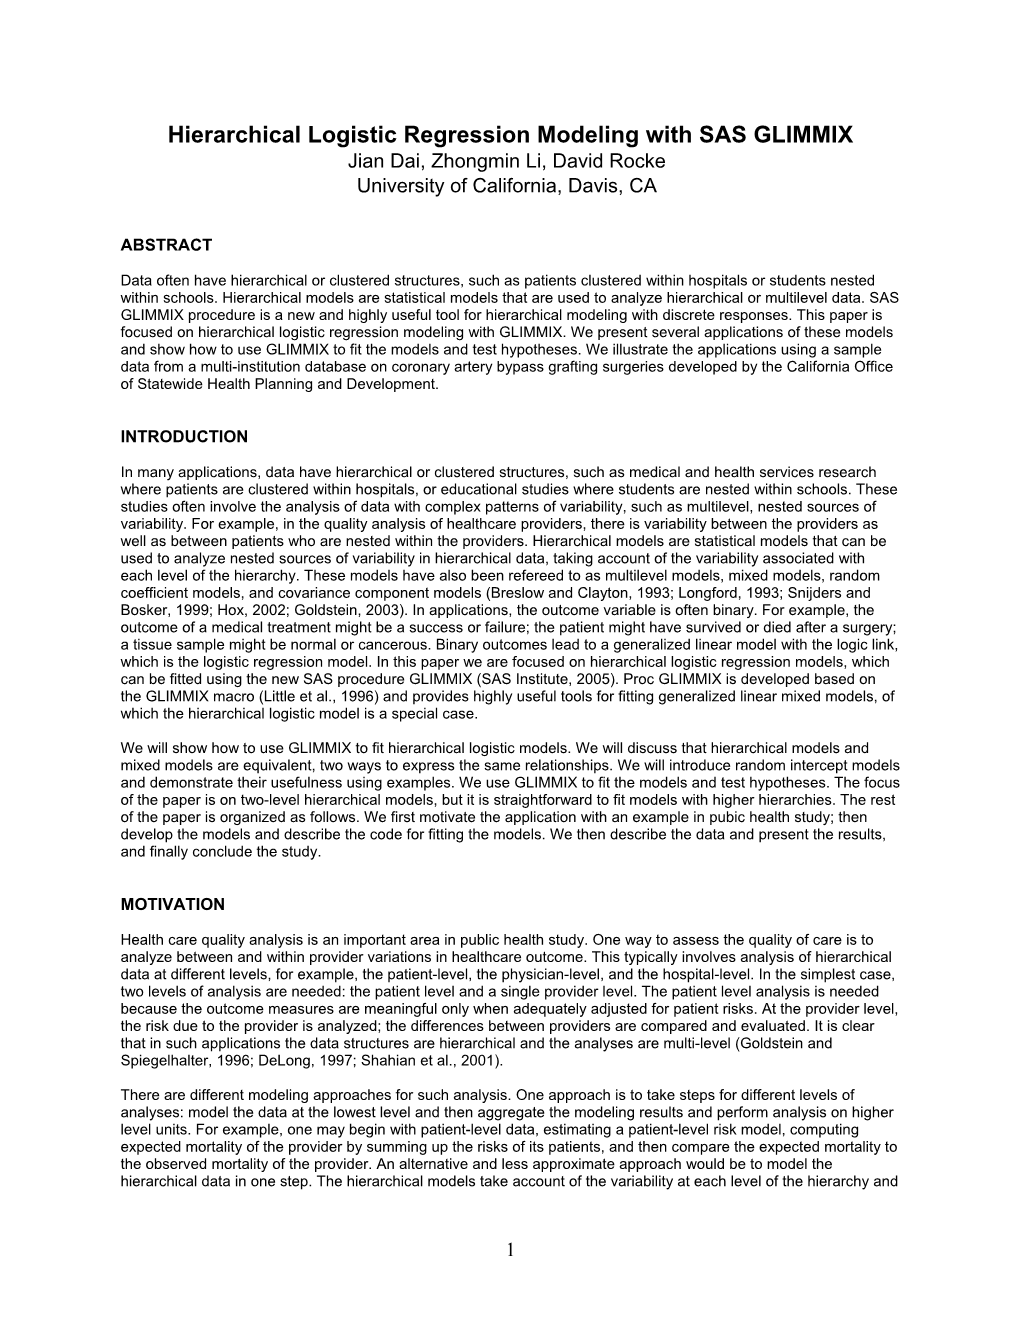 Hierarchical Logistic Regression Modeling with SAS GLIMMIX Jian Dai, Zhongmin Li, David Rocke University of California, Davis, CA